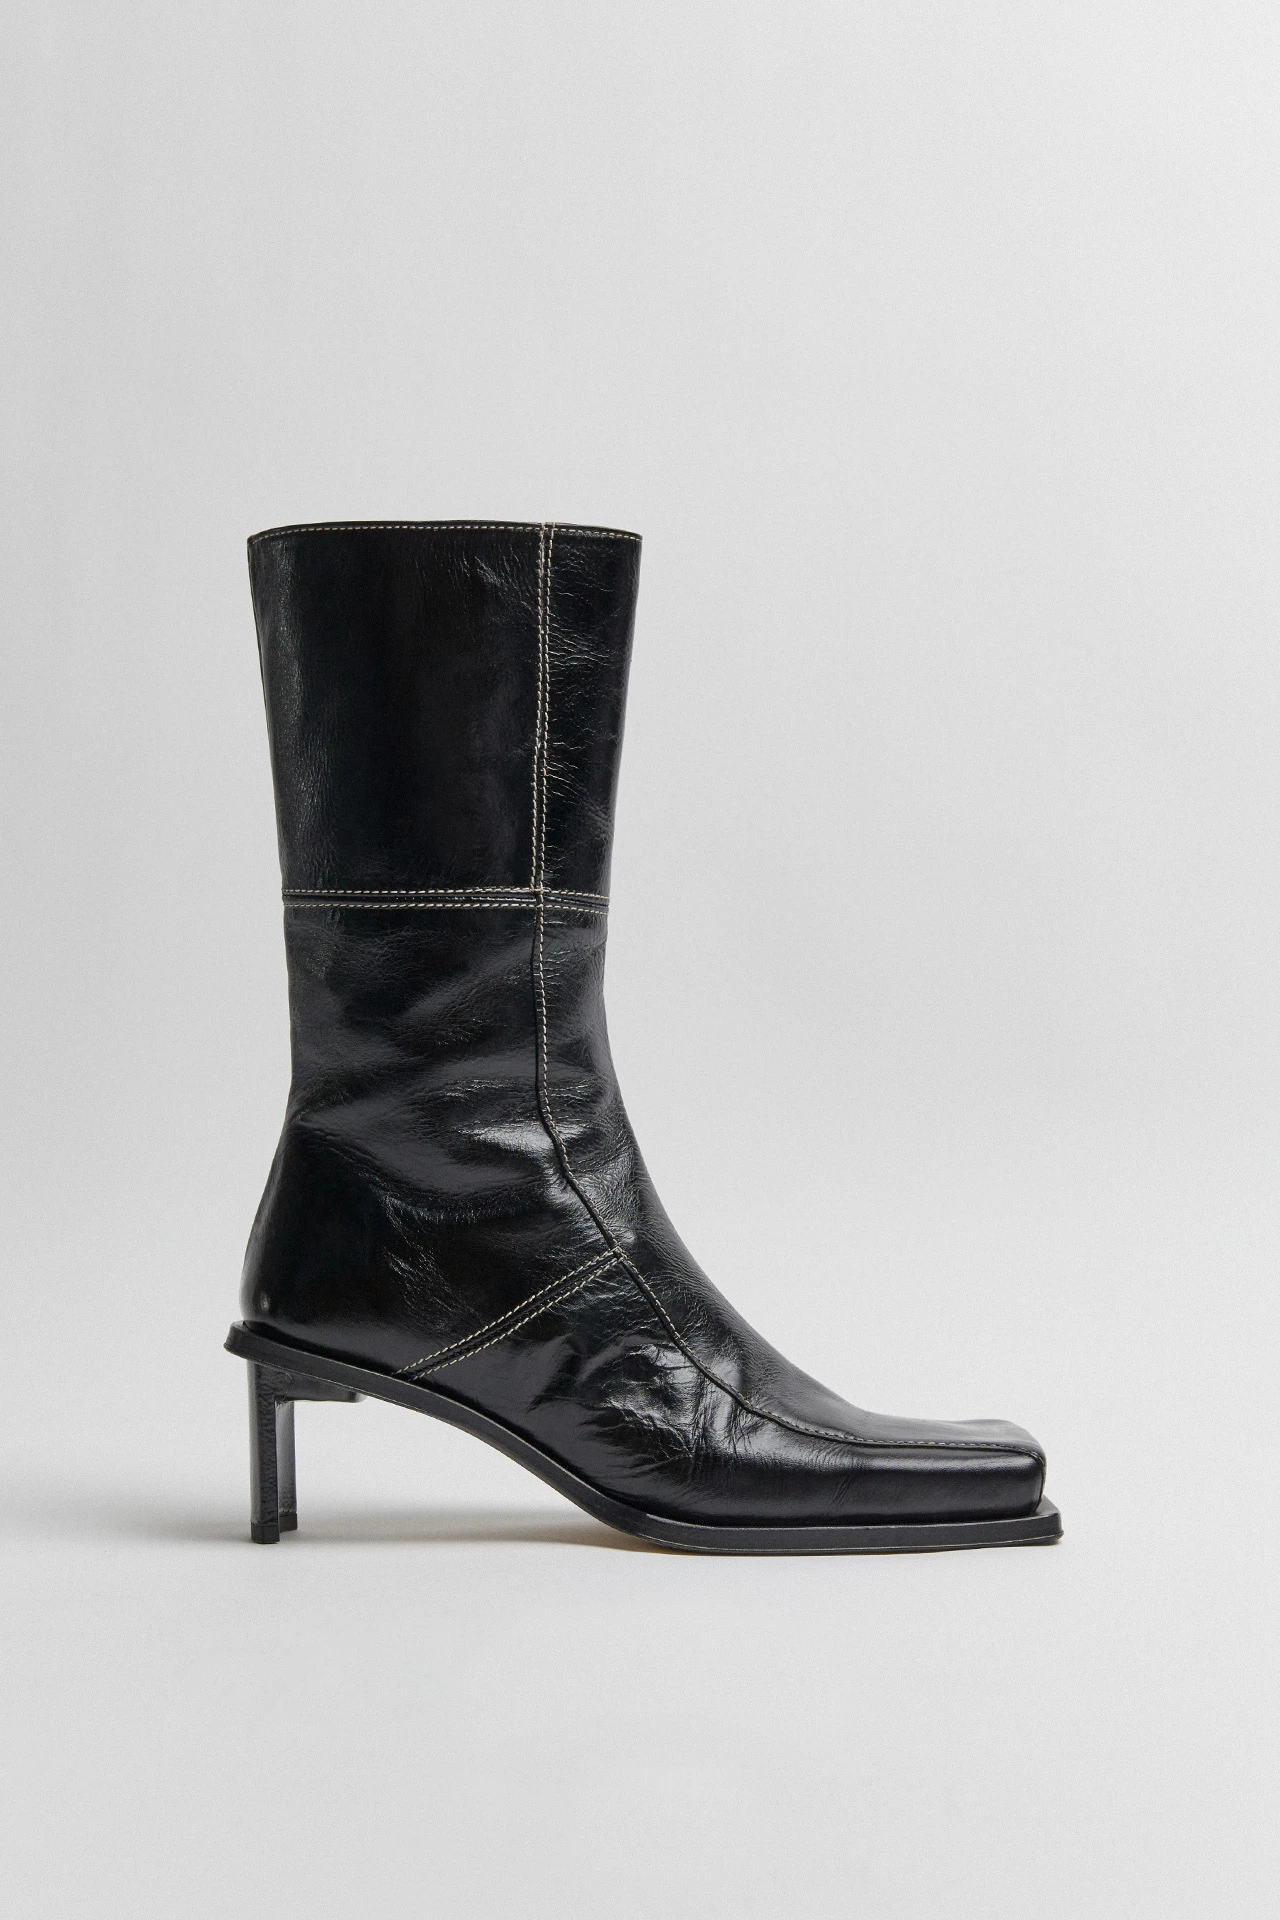 miista-amparo-black-boots-1